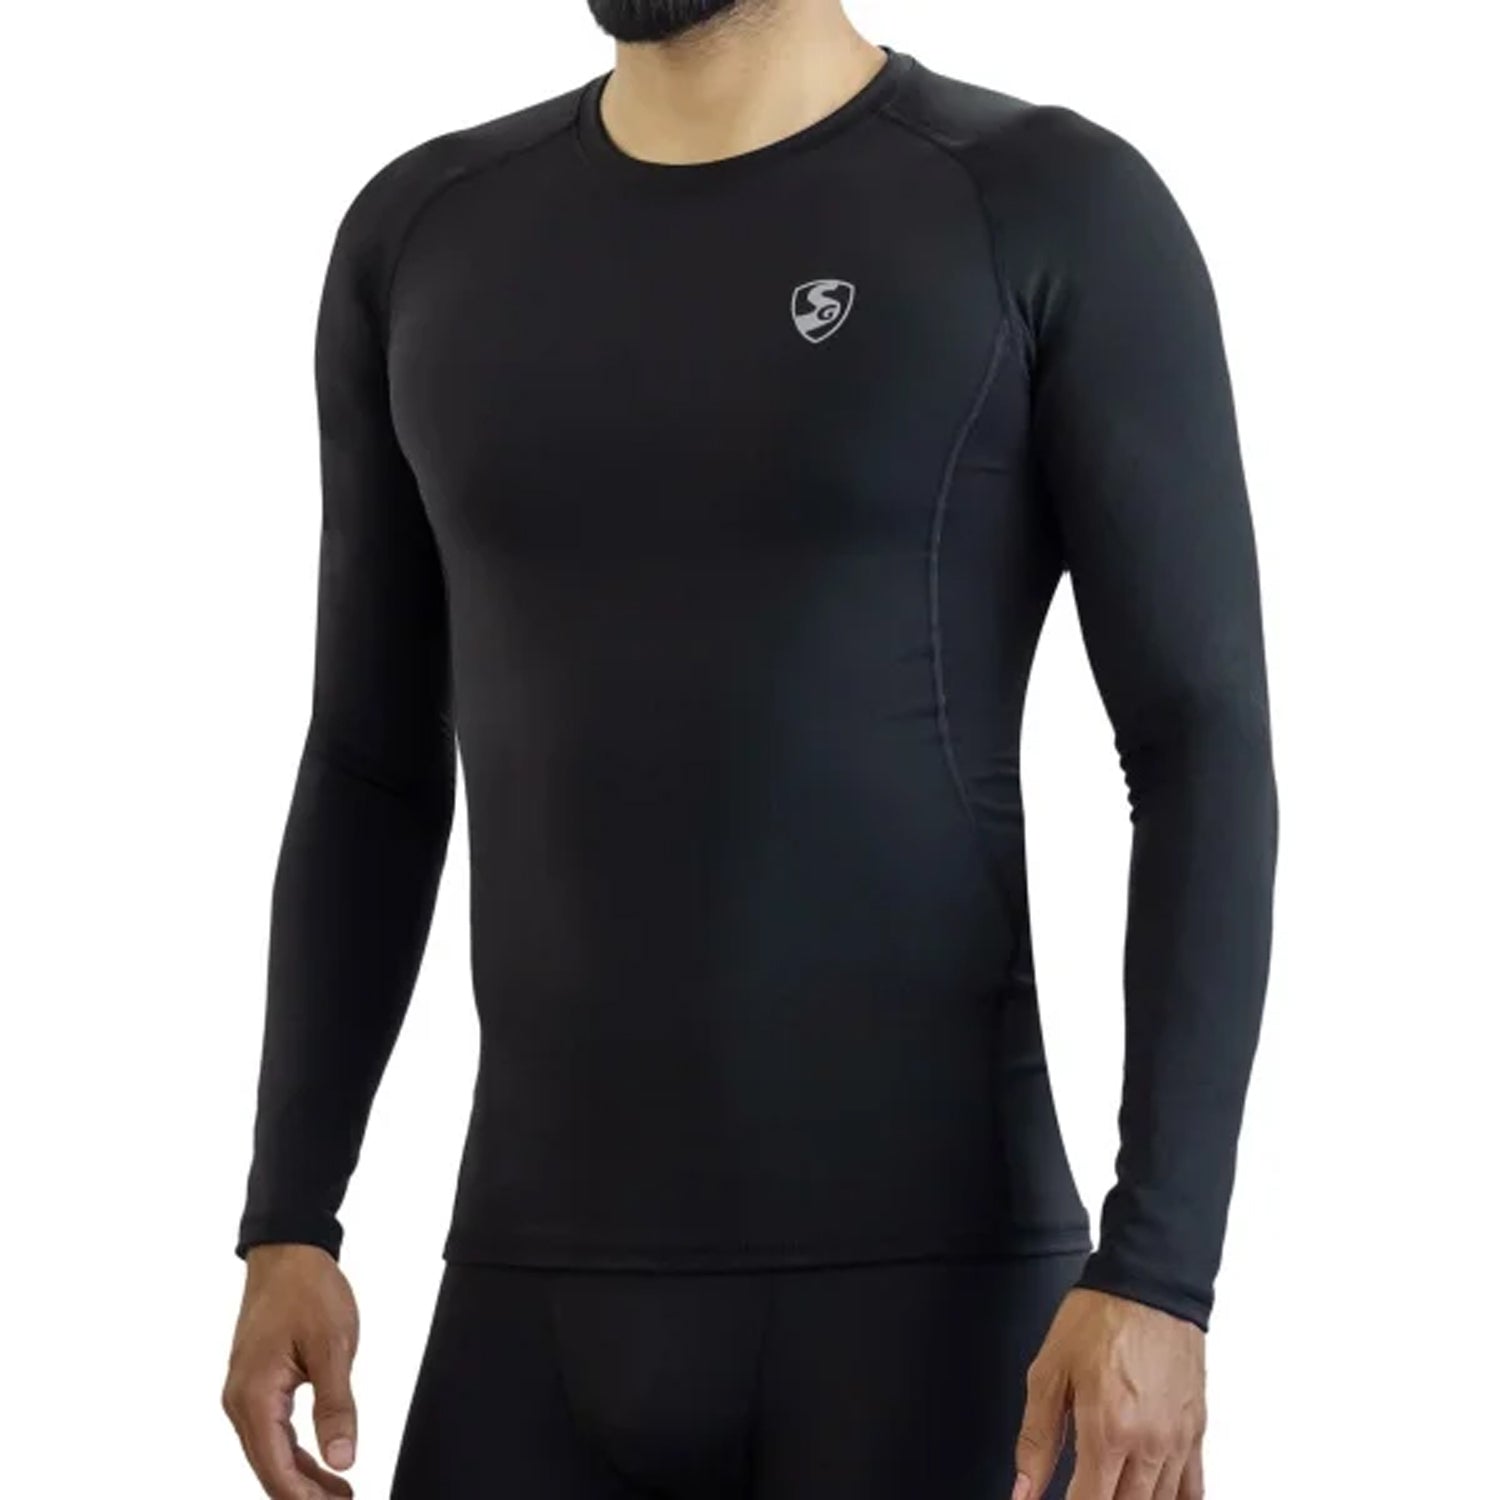 SG Xtreme Cricket Compression Bodywear Skin Fit, Black - Best Price online Prokicksports.com